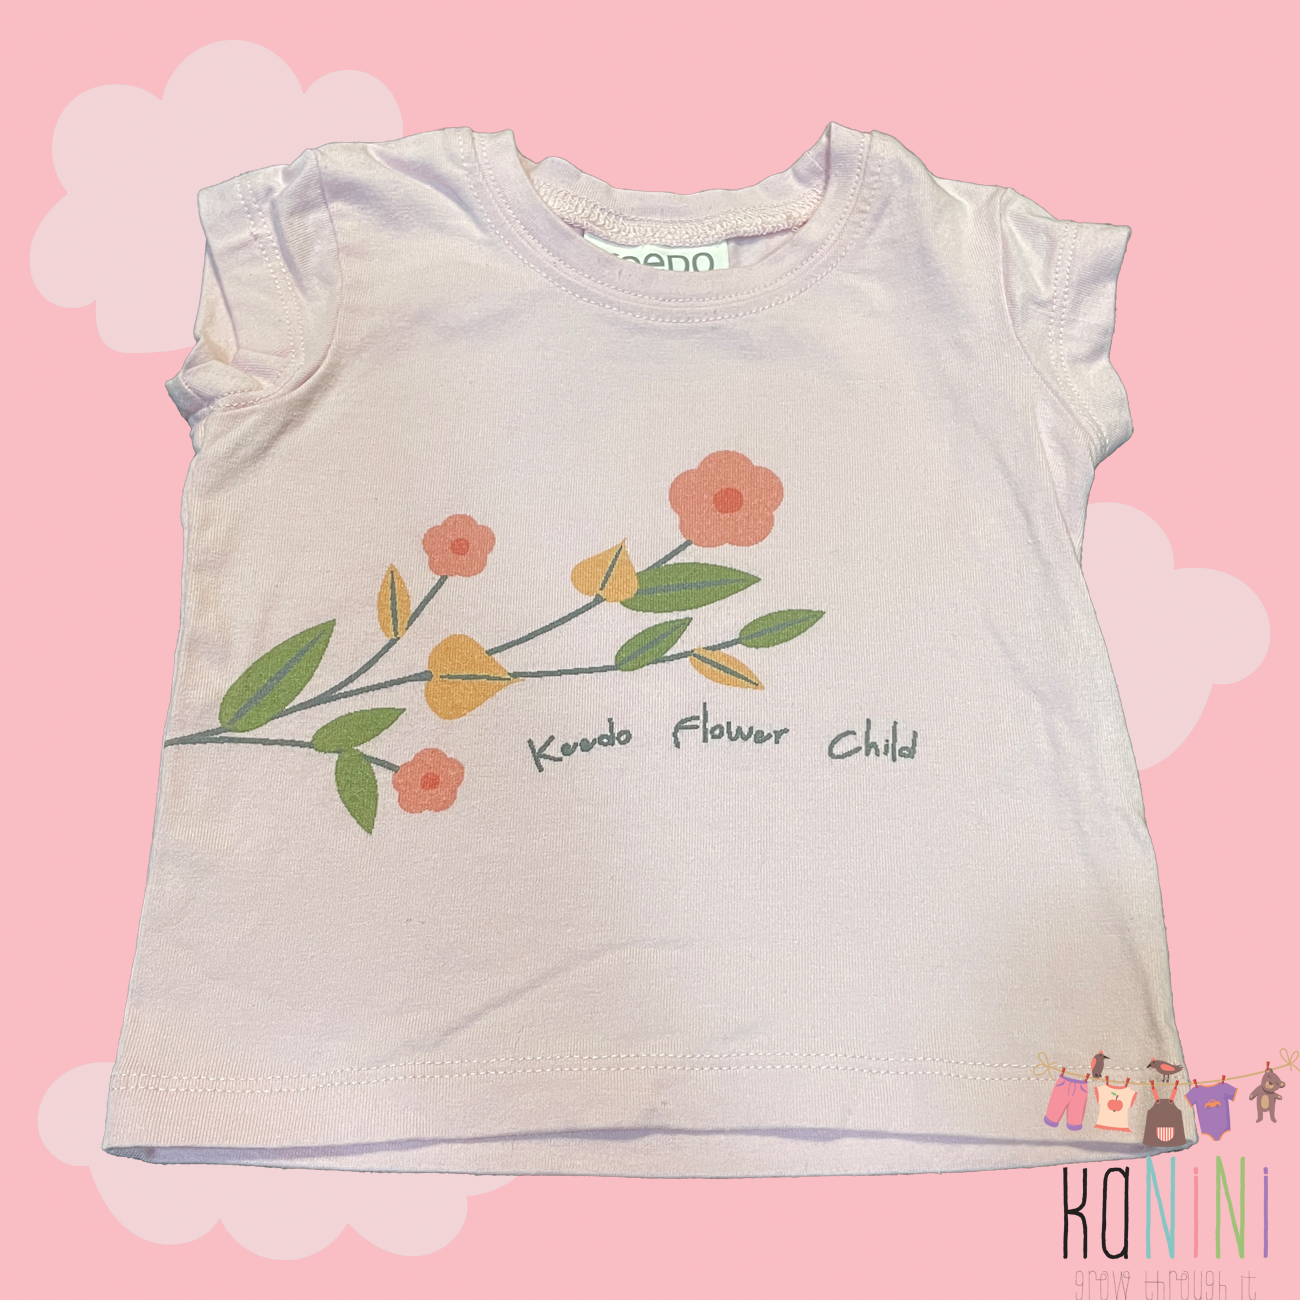 Featured image for “Keedo 0 - 3 Months Girls Flower Child Pink t-Shirt”